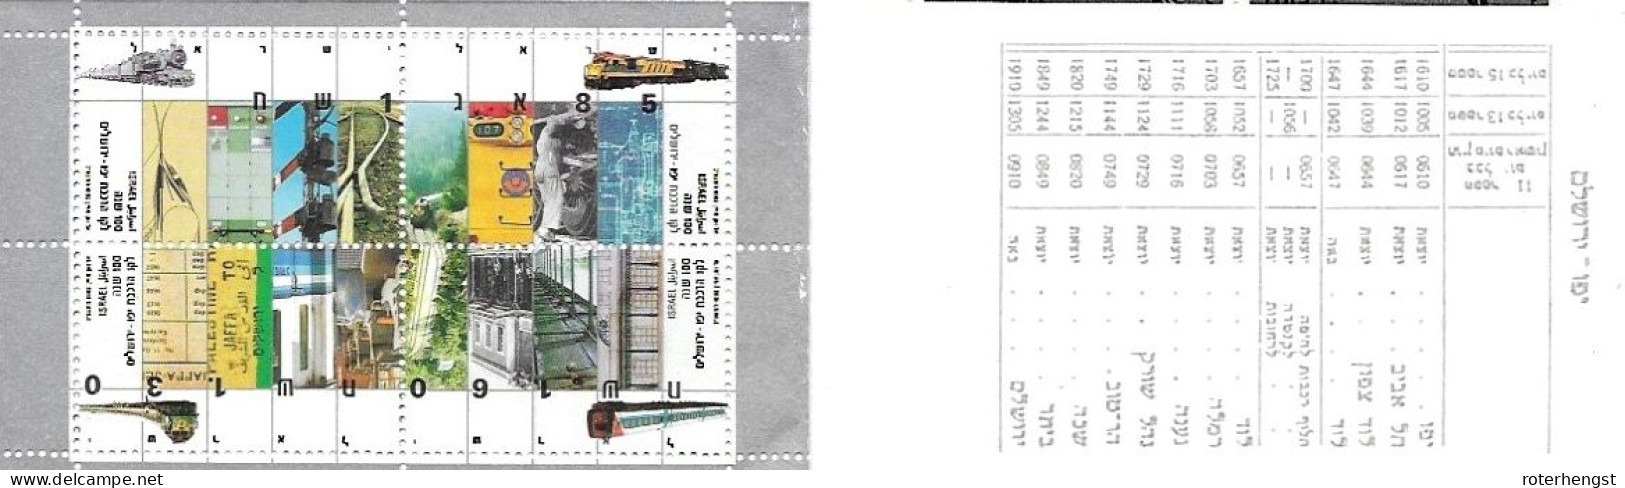 Israel Booklet Mnh ** 1992 15 Euros Train - Libretti